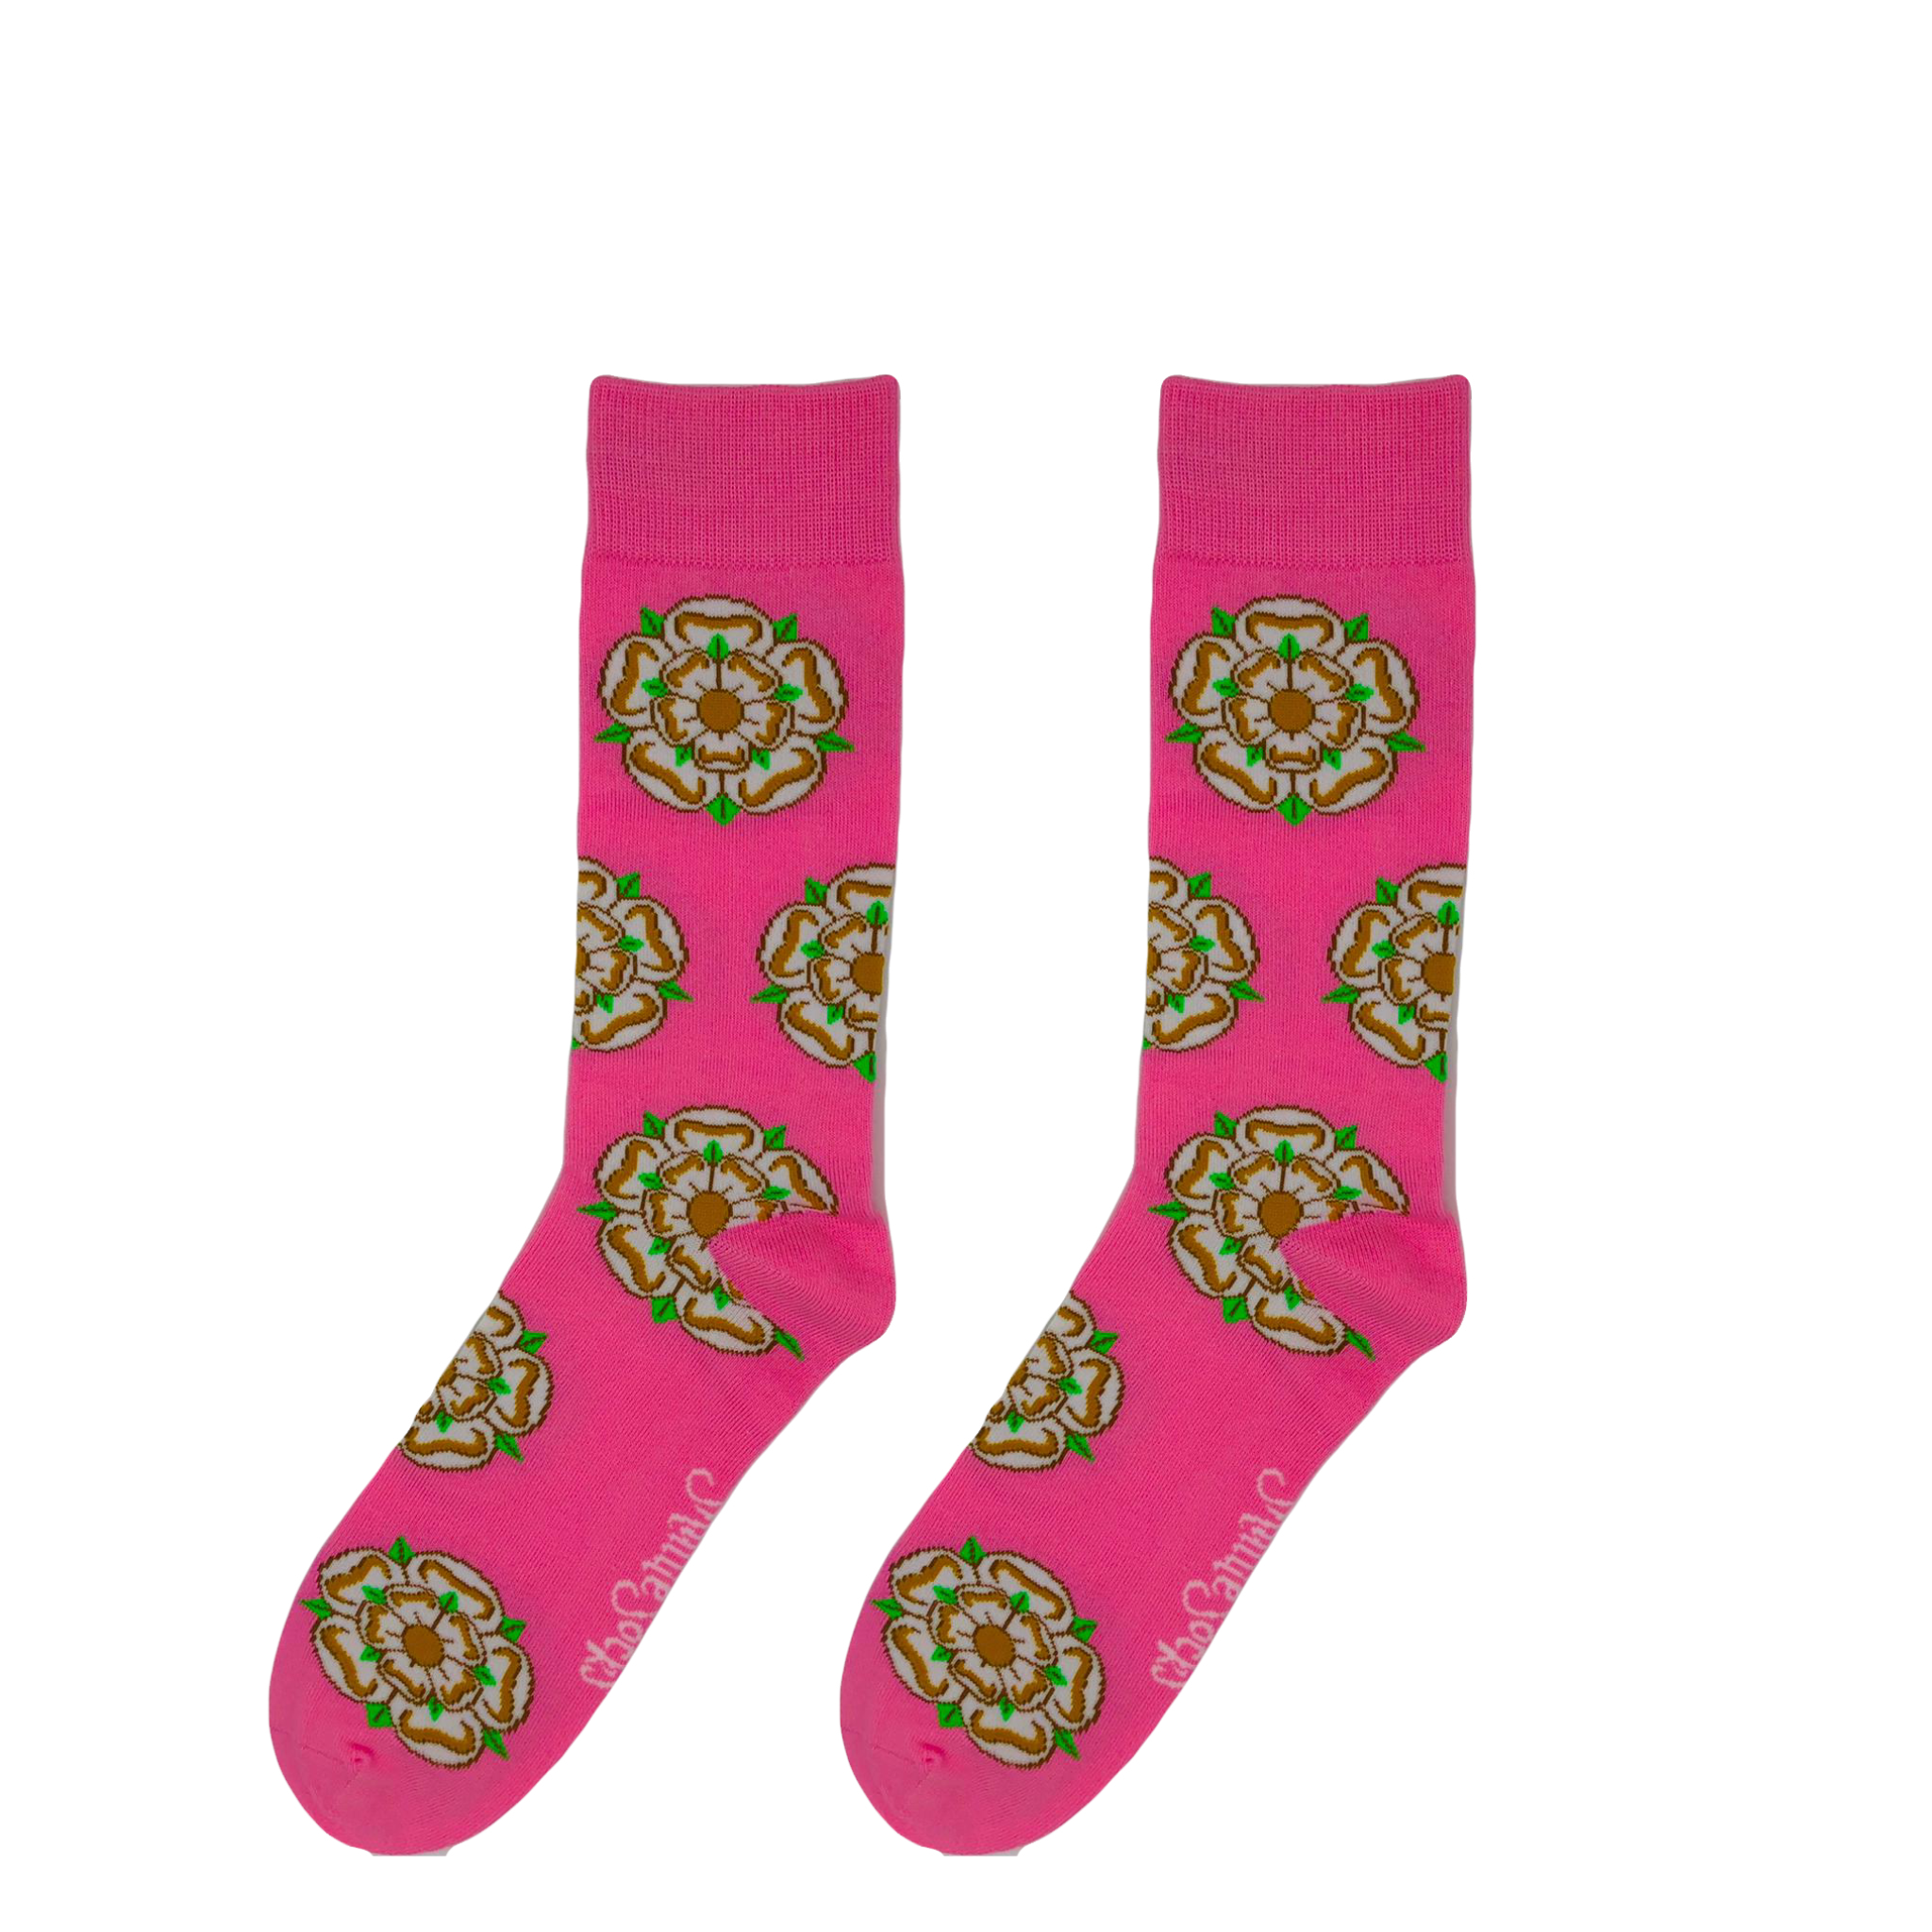 Yorkshire Rose Socks Pink